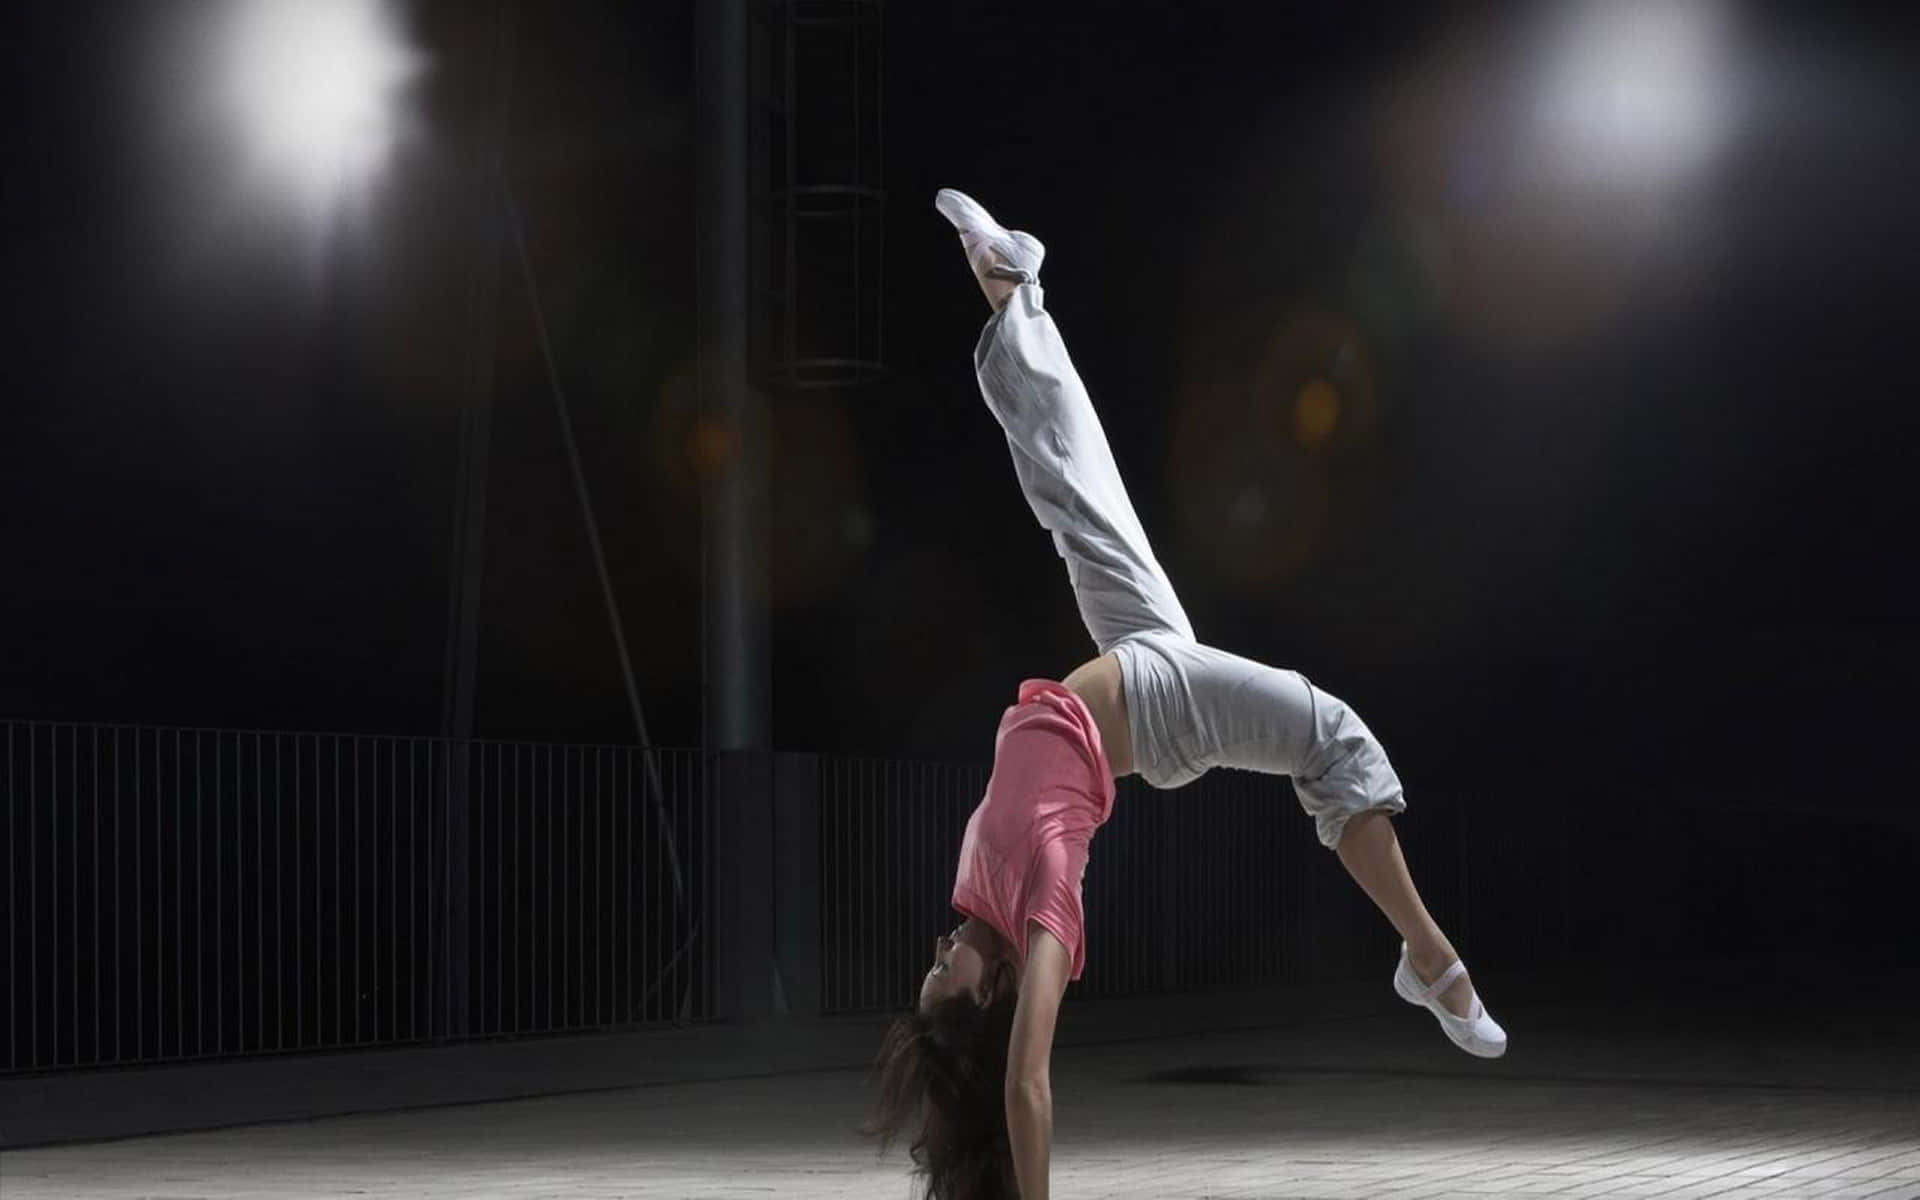 dance live wallpaper,extreme sport,sports,recreation,graphic design,flip  (acrobatic) (#317069) - WallpaperUse